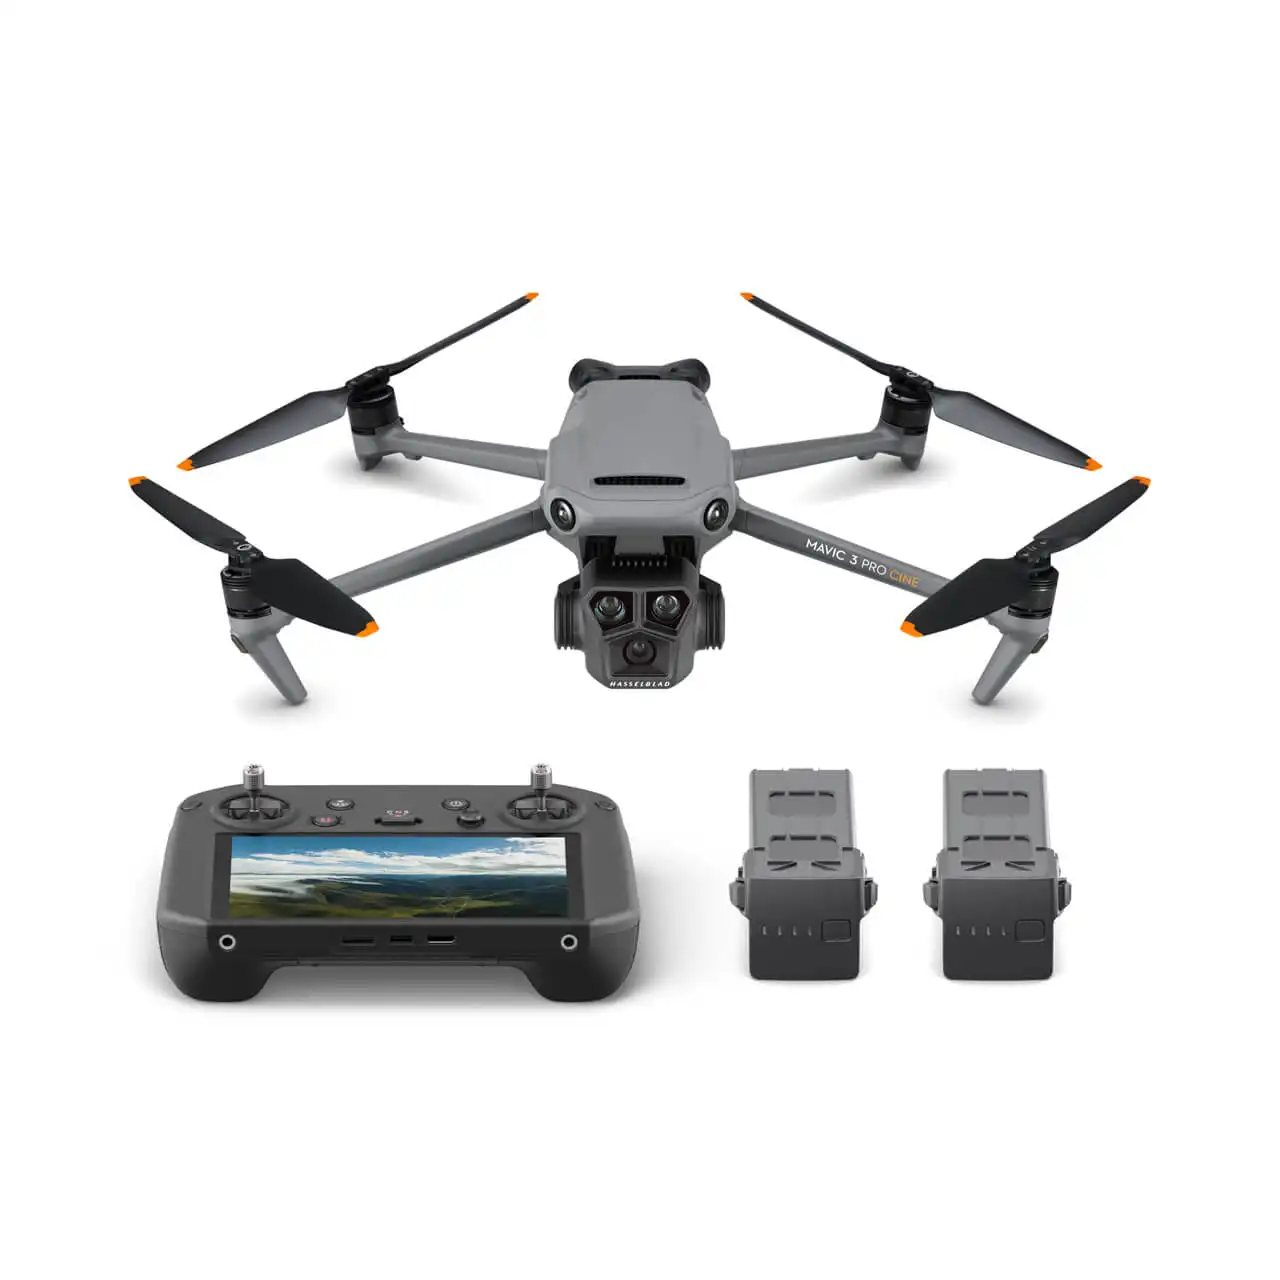 Stok Mavic 3 Pro 4 3 CMOS Kamera Hasselblad 15km HD transmisi Video 43-Min waktu terbang maks untuk DJI mini 4 pro drone